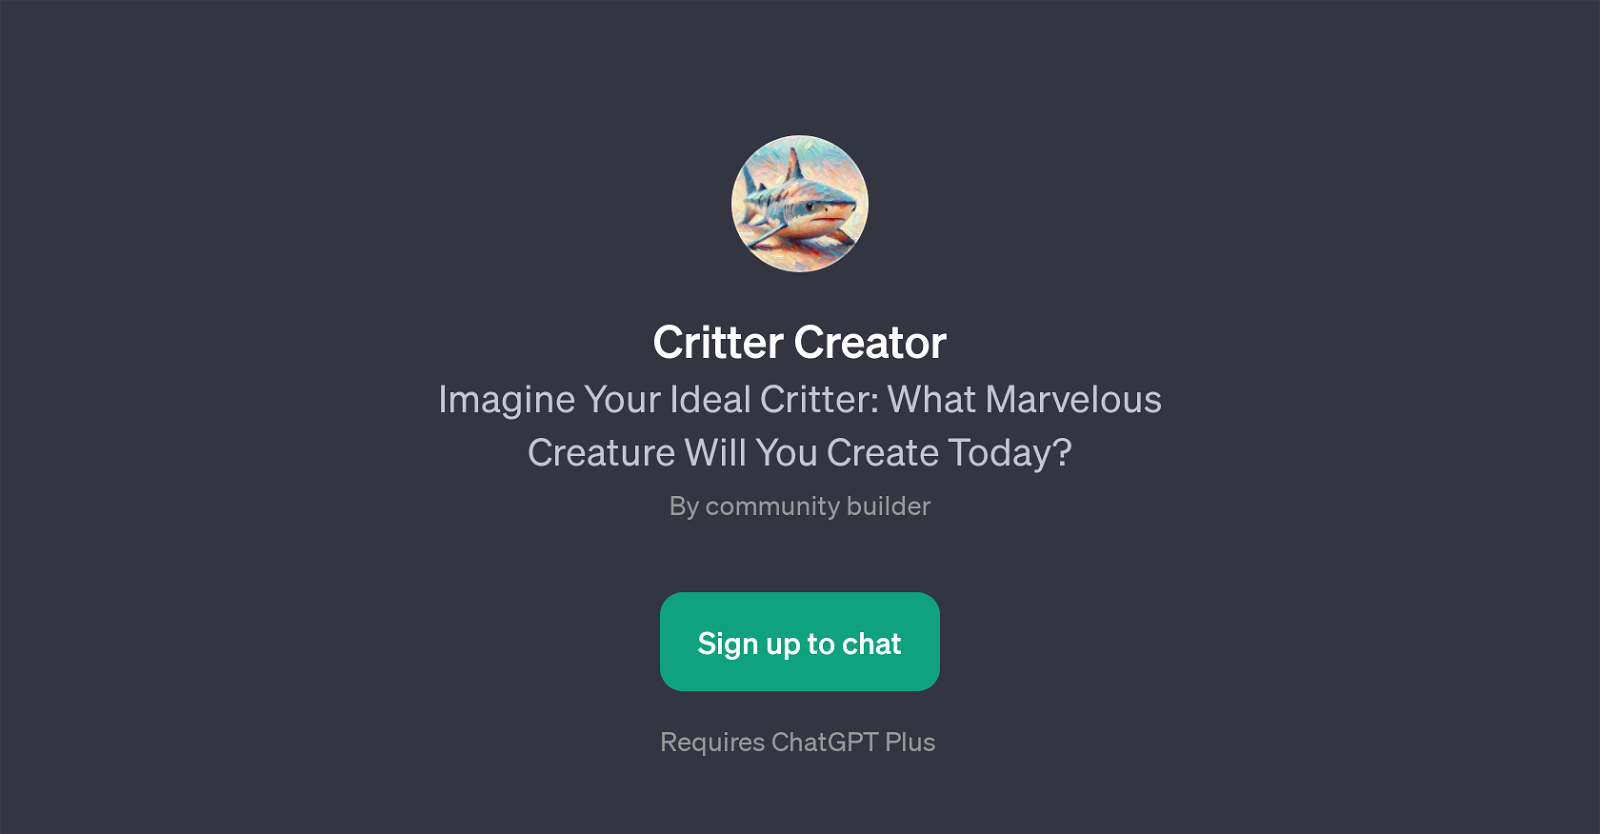 Critter Creator website